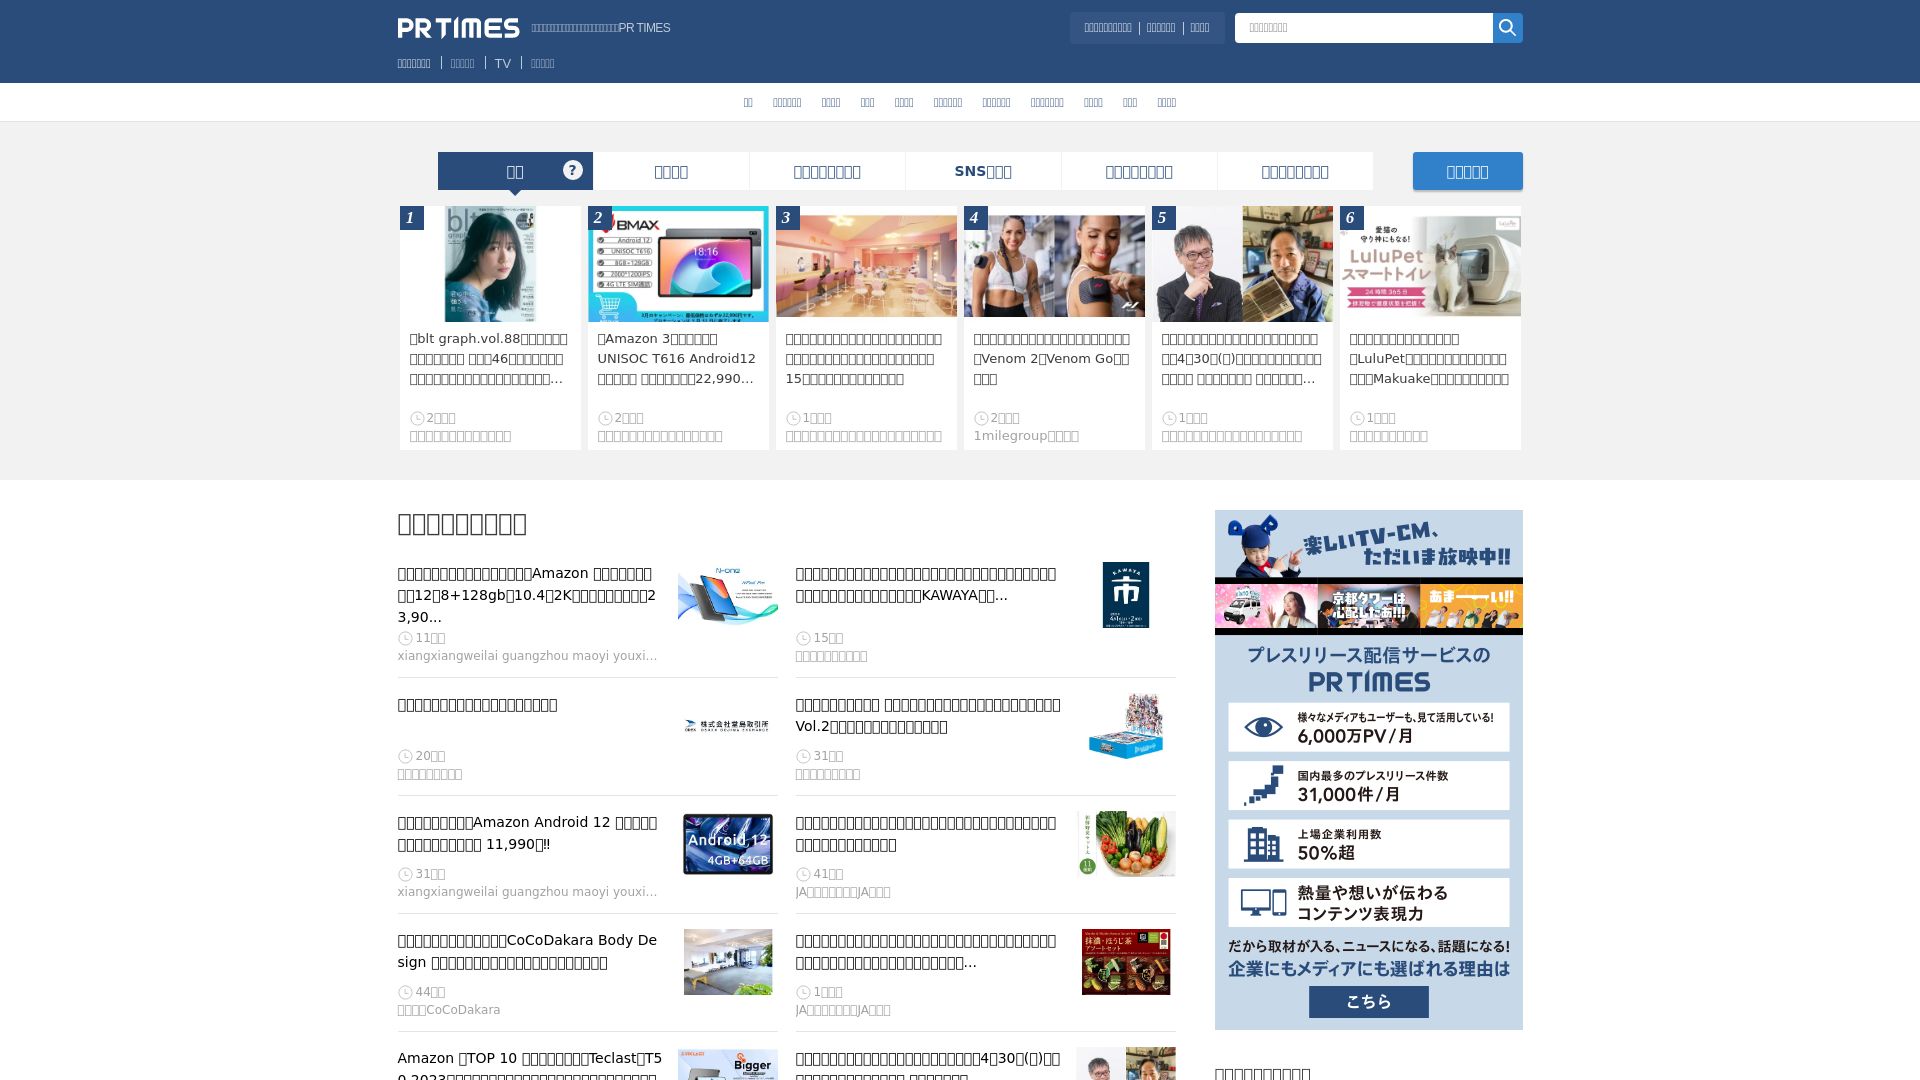 Estado web prtimes.jp está   ONLINE